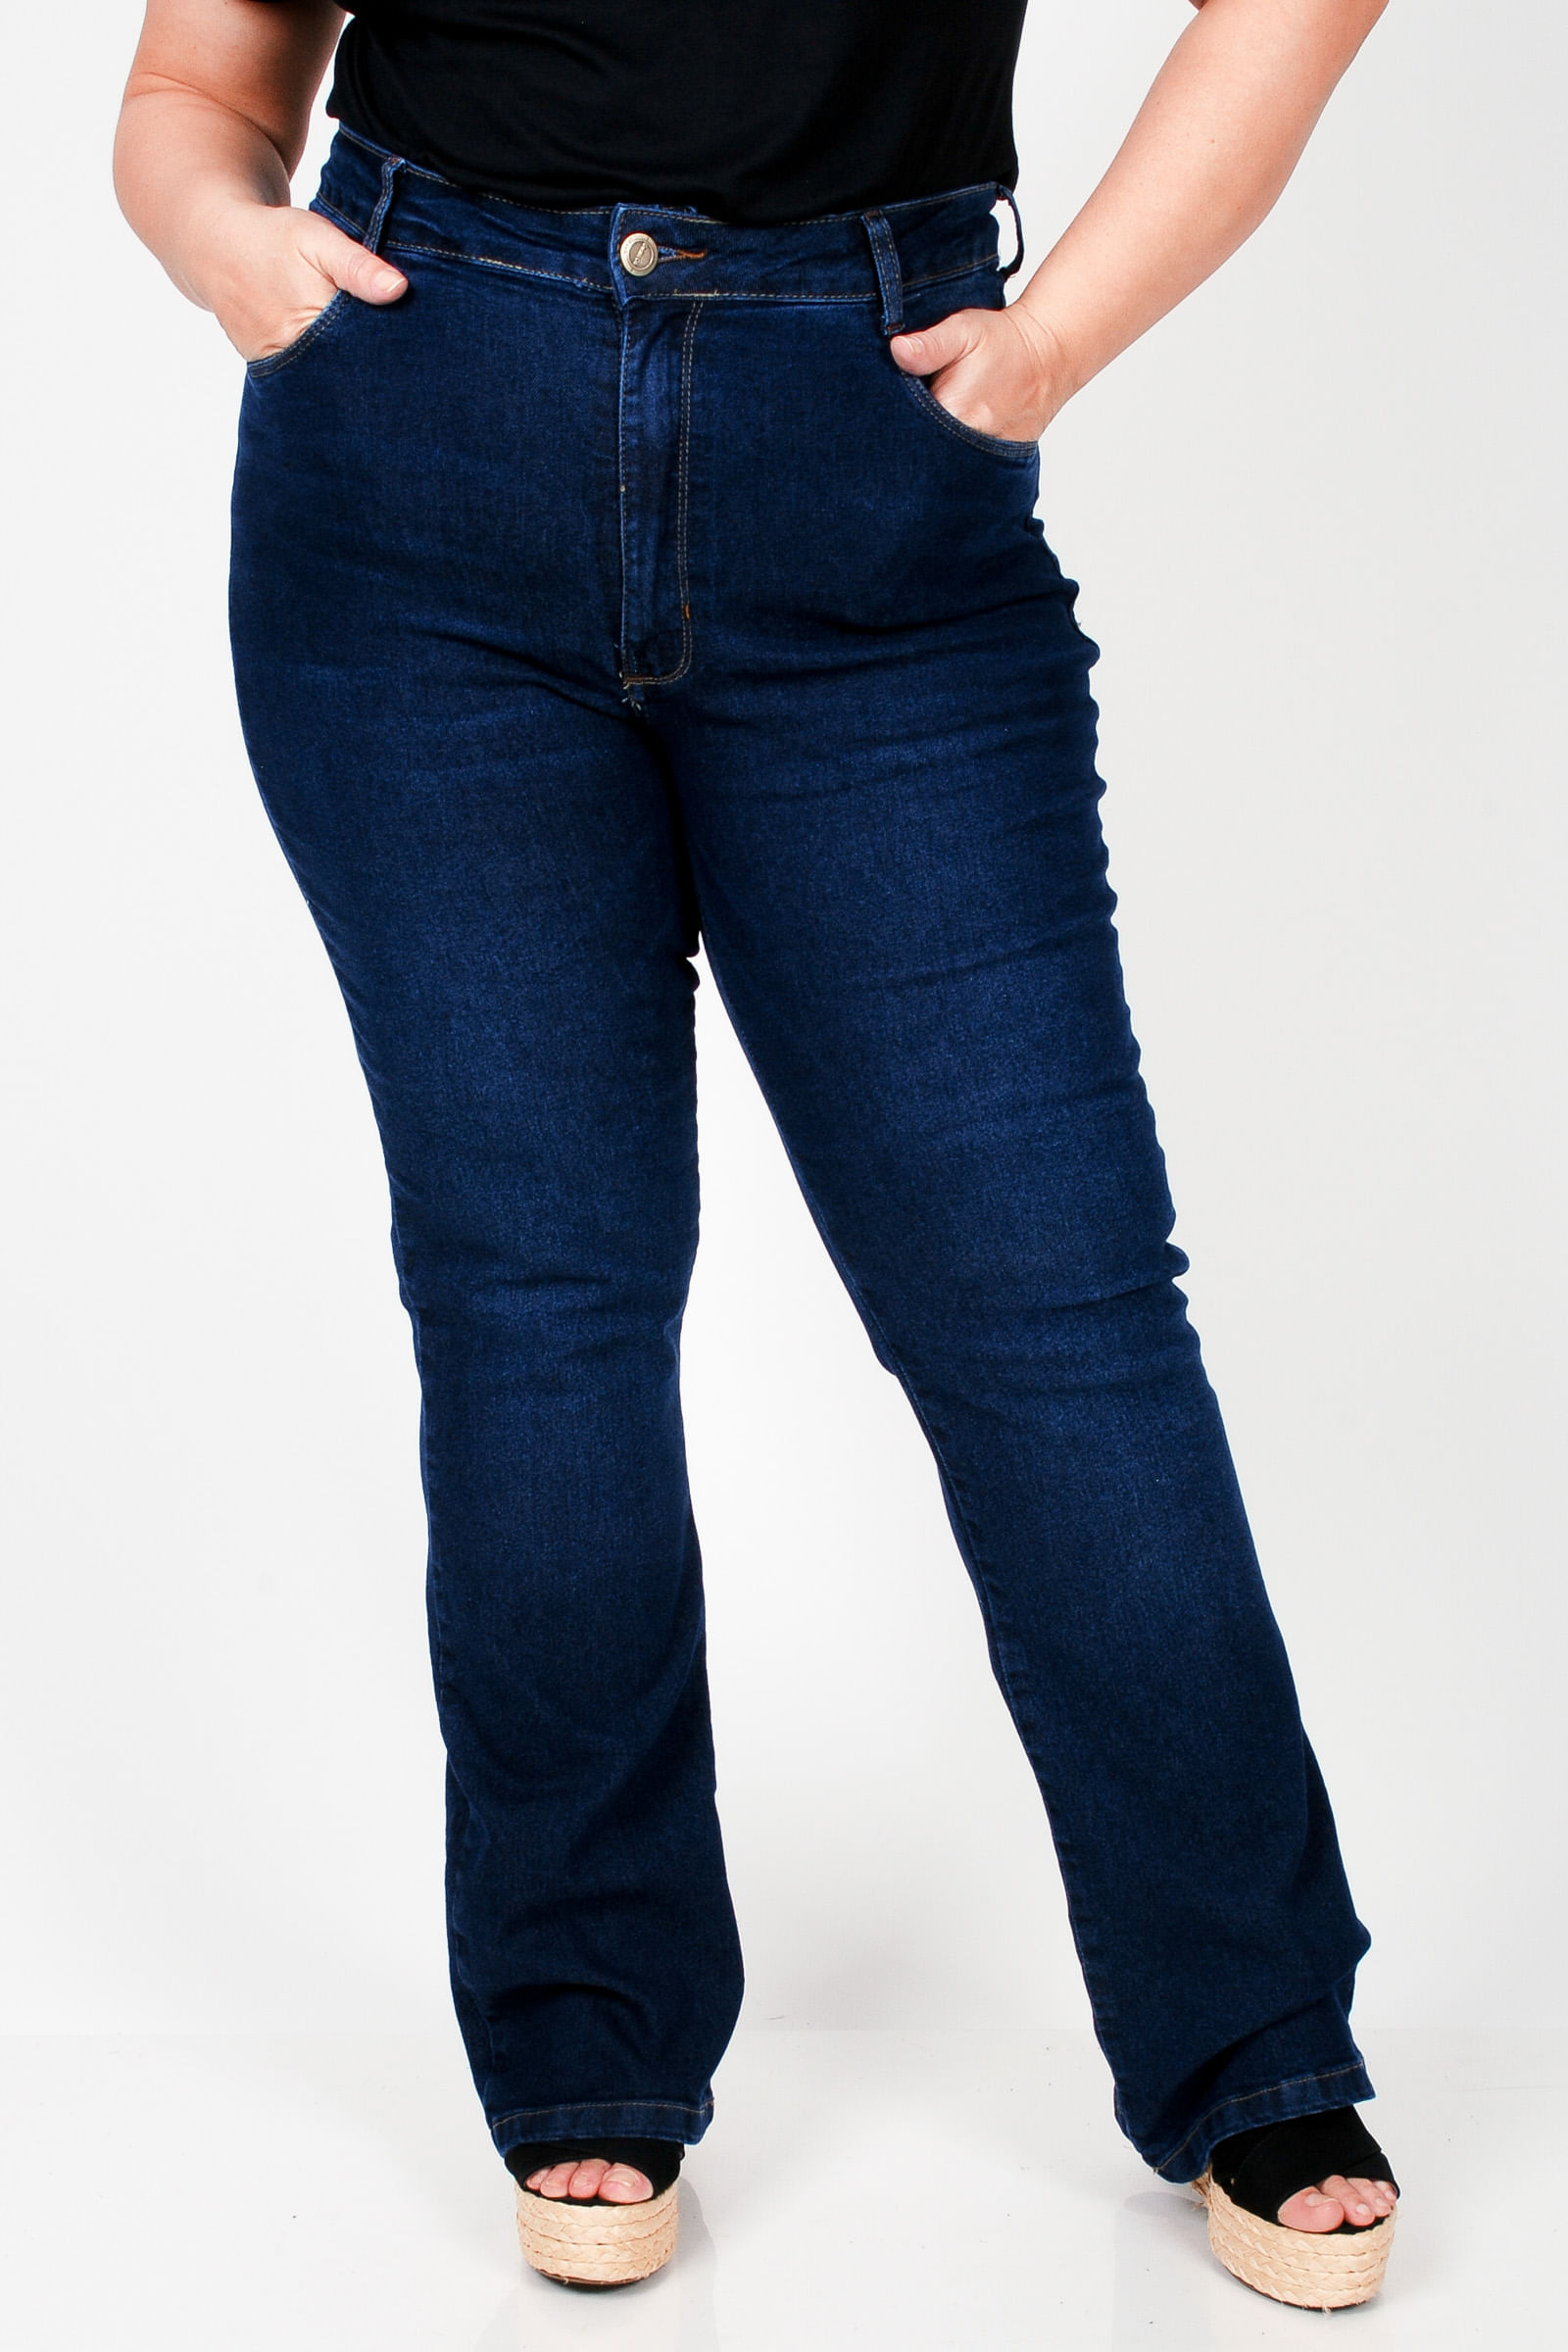 Calca-flare-jeans-plus-size_0102_1